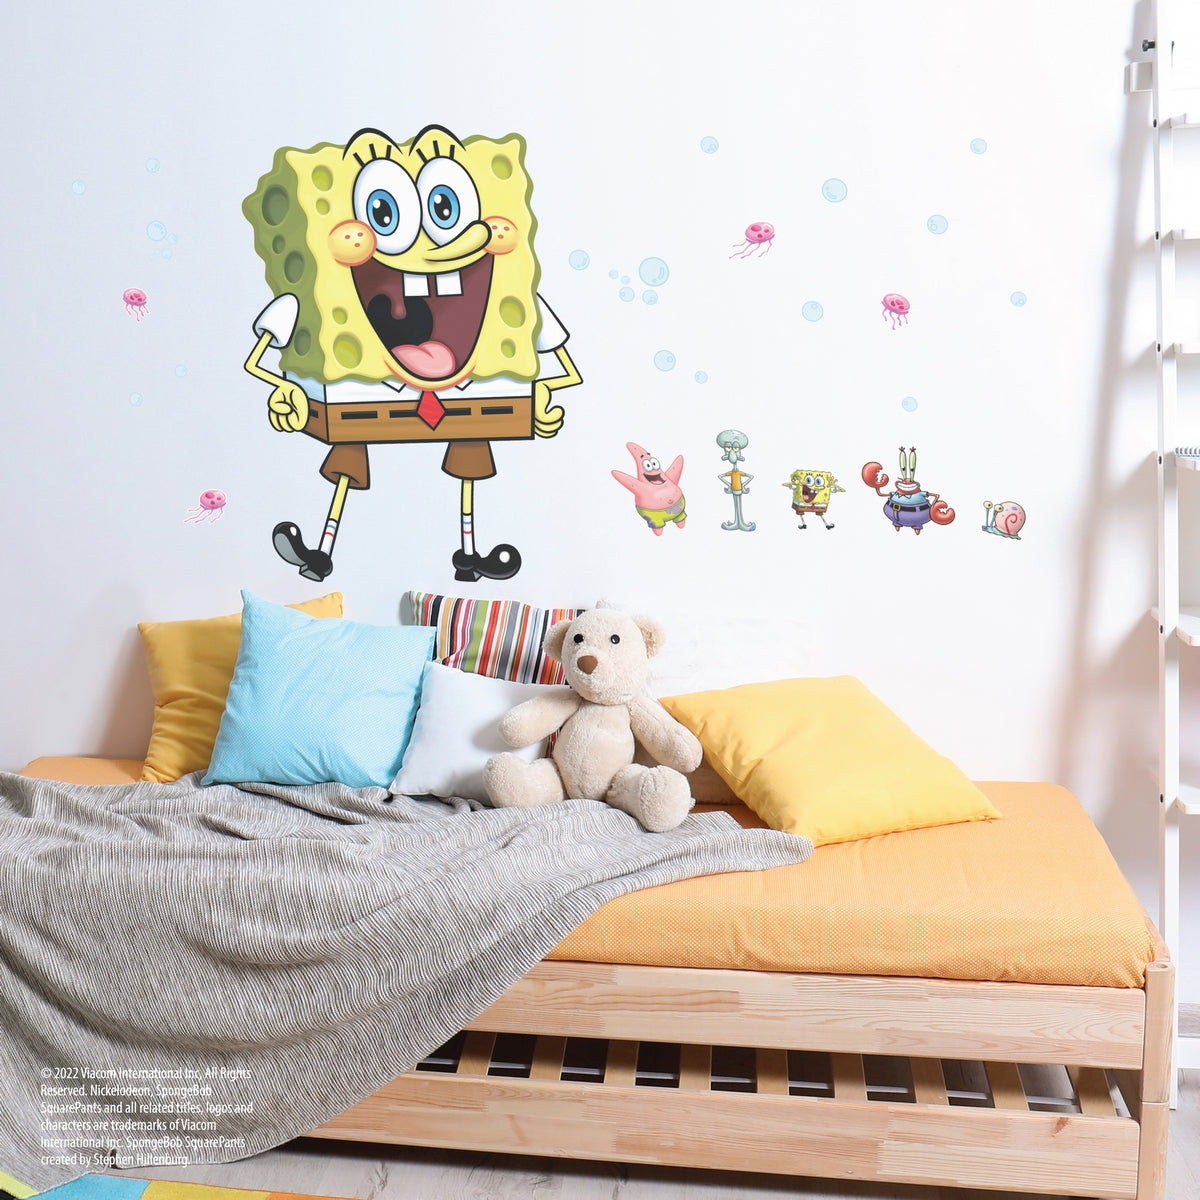 SpongeBob SquarePants Interactive Wall Decal